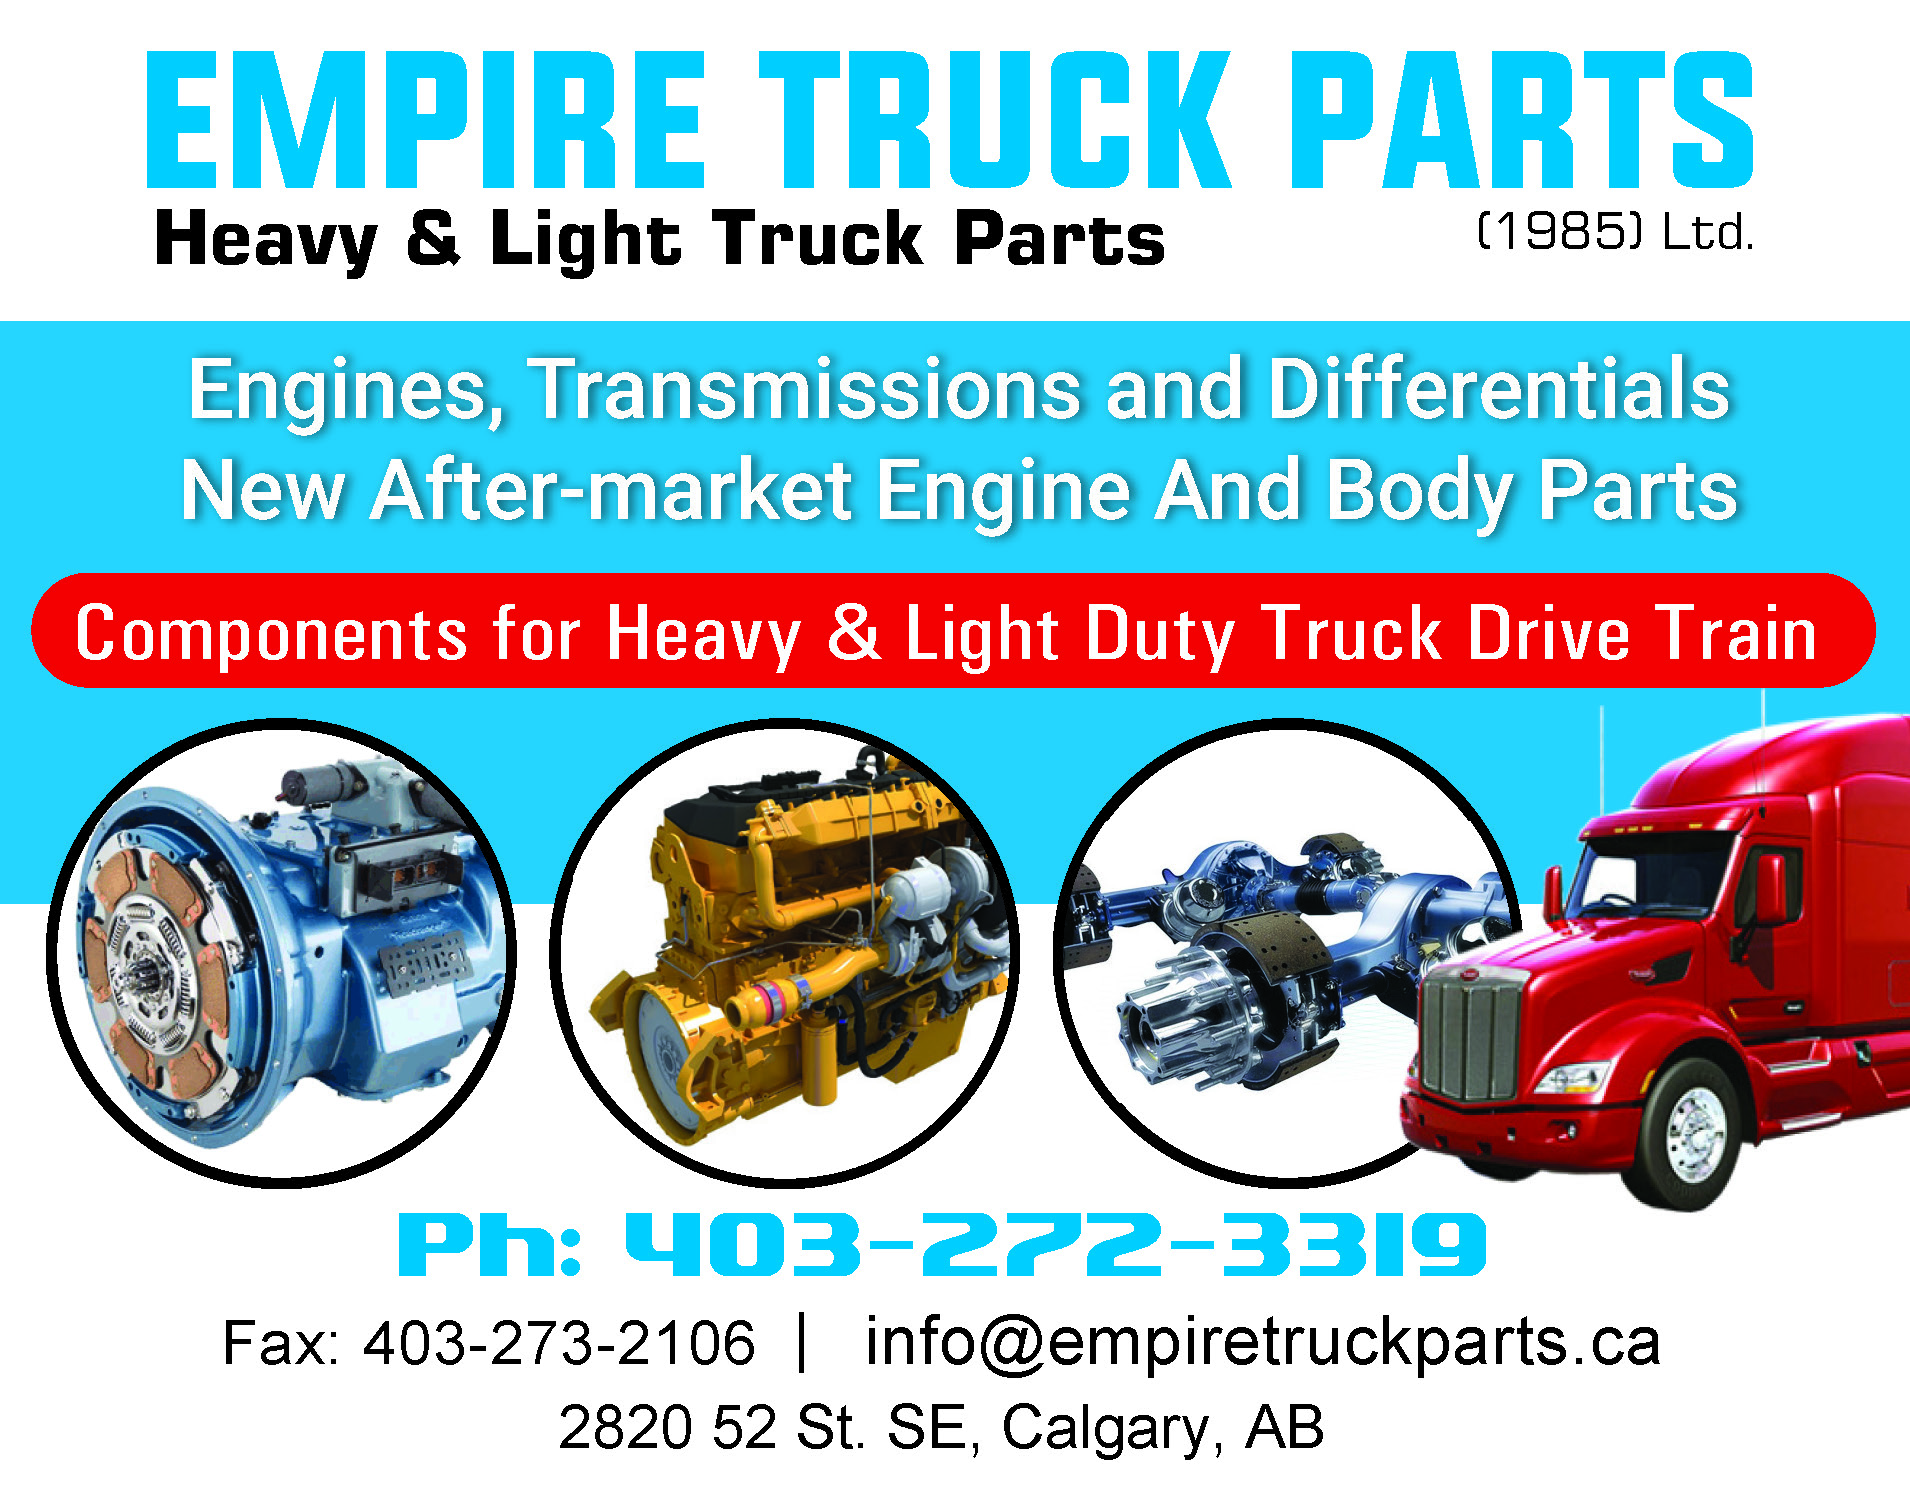 empire-truck-parts-1985-ltd-cPCJlD2.jpeg